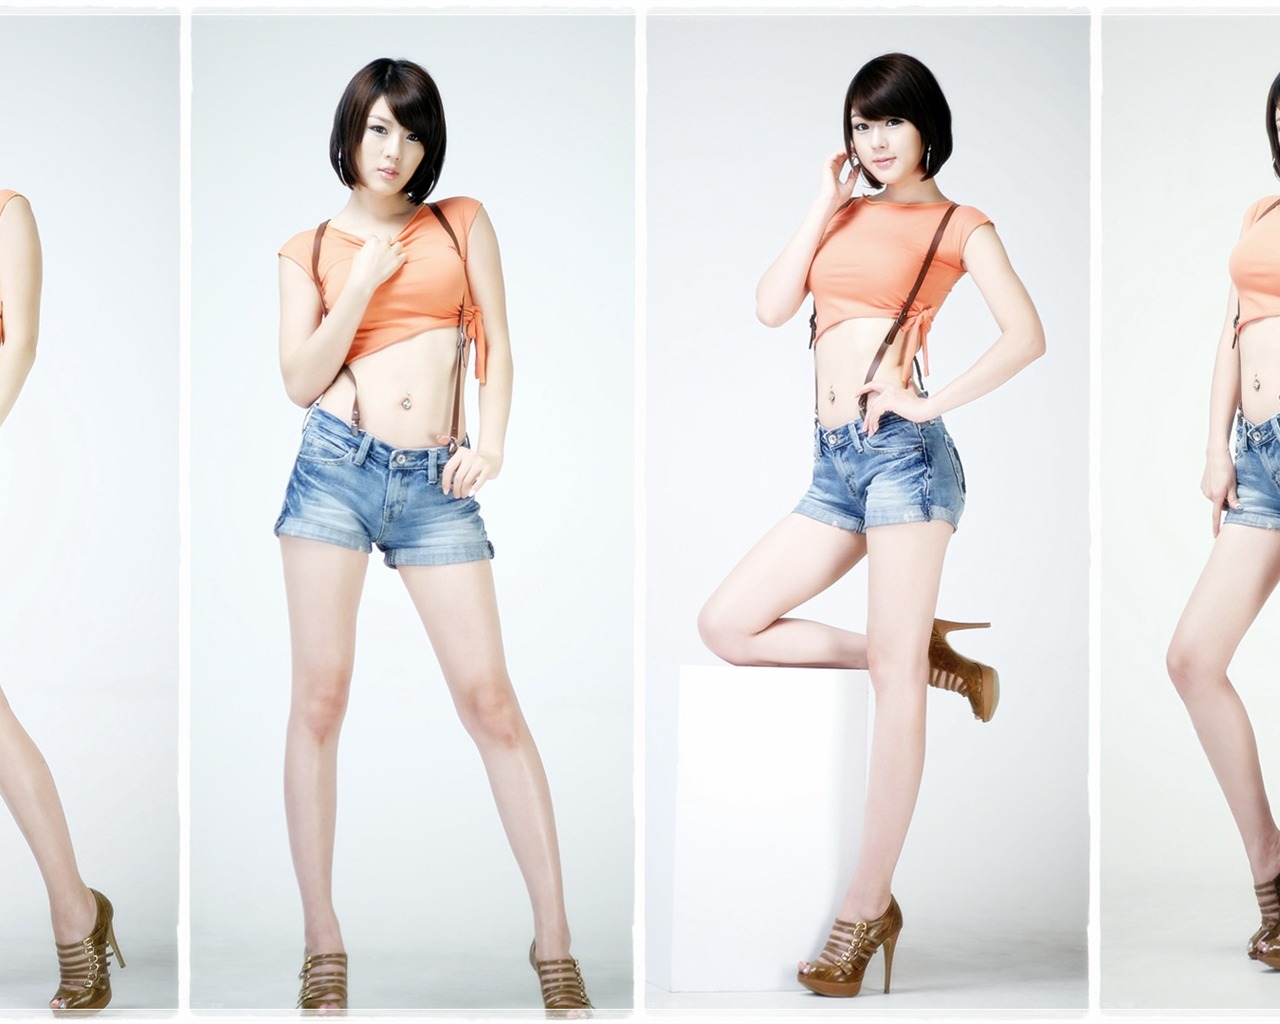 韩国车展模特 Hwang Mi Hee & Song Jina15 - 1280x1024